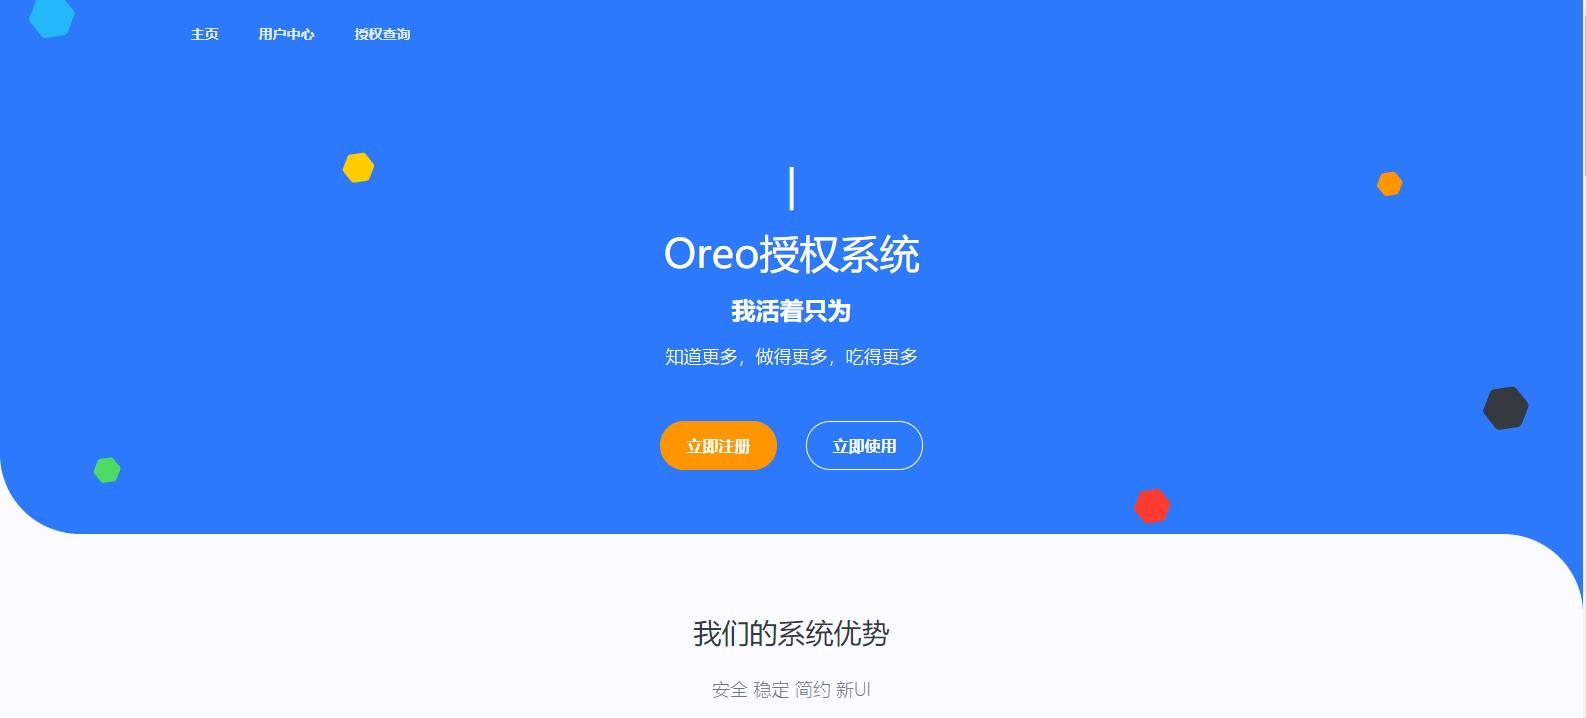 Oreo域名授权验证系统v1.0.6开源版本网站源码-1